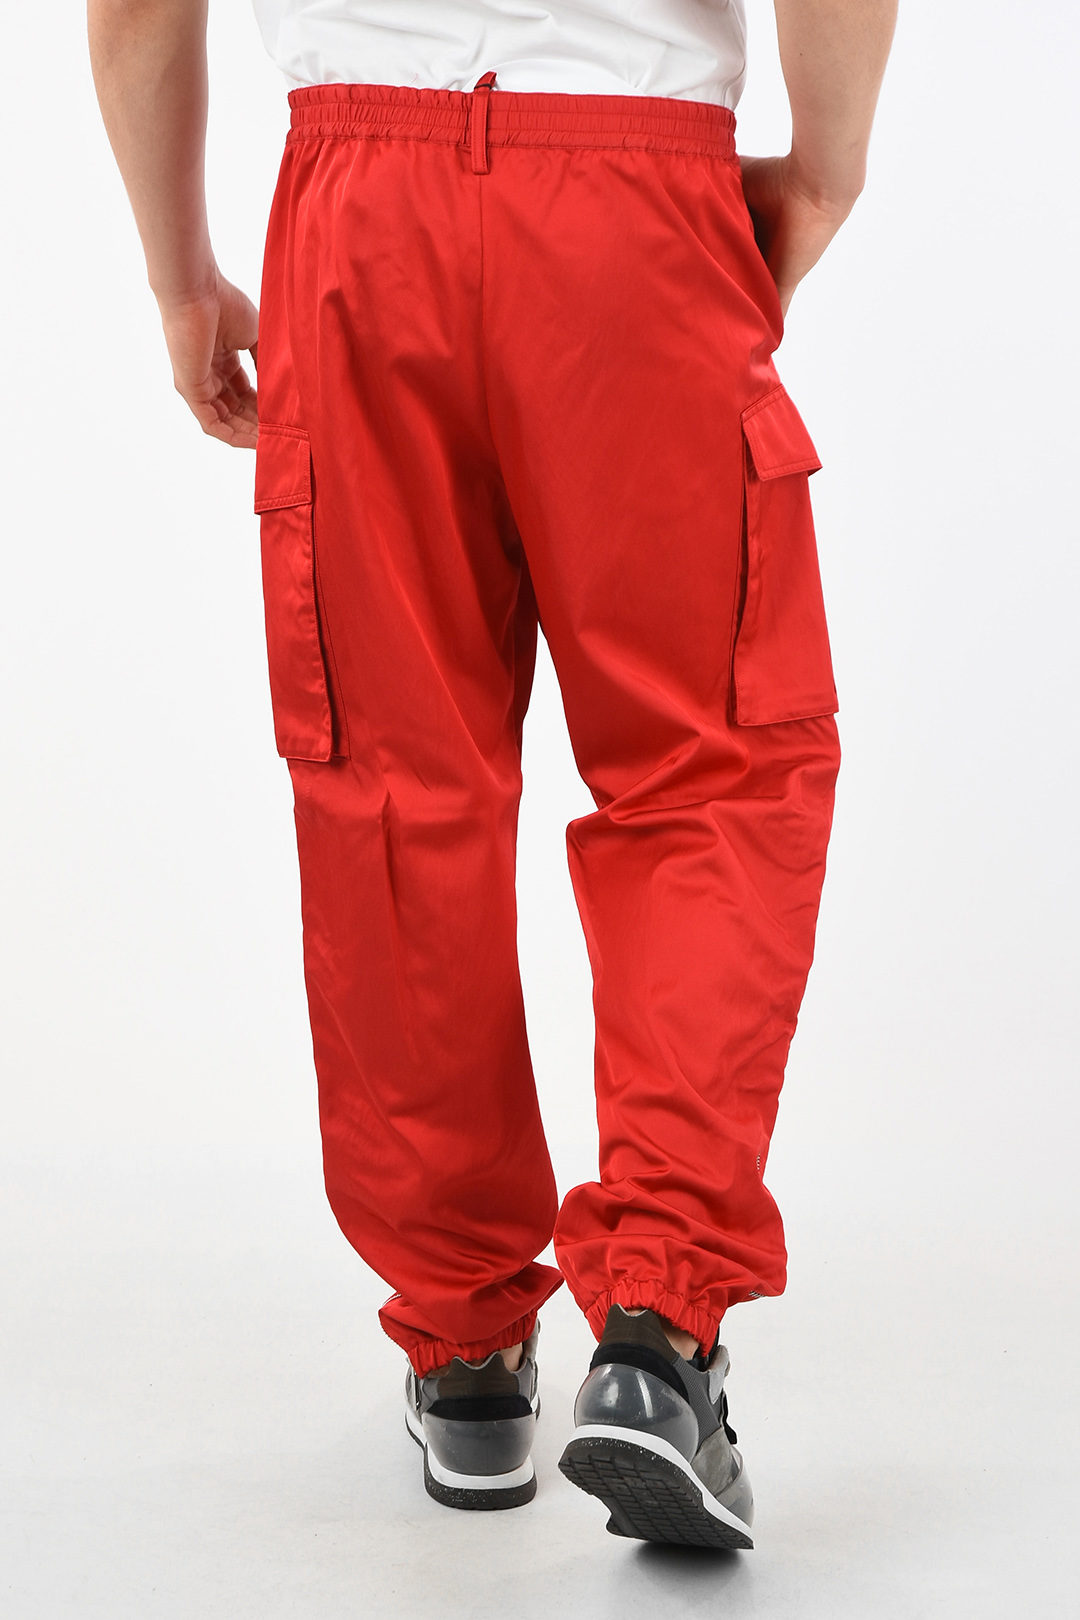 Mens Skinny Fit Side Print Stripe Track Pants Ankle Zipper Elastic Waist  S-2XL | eBay